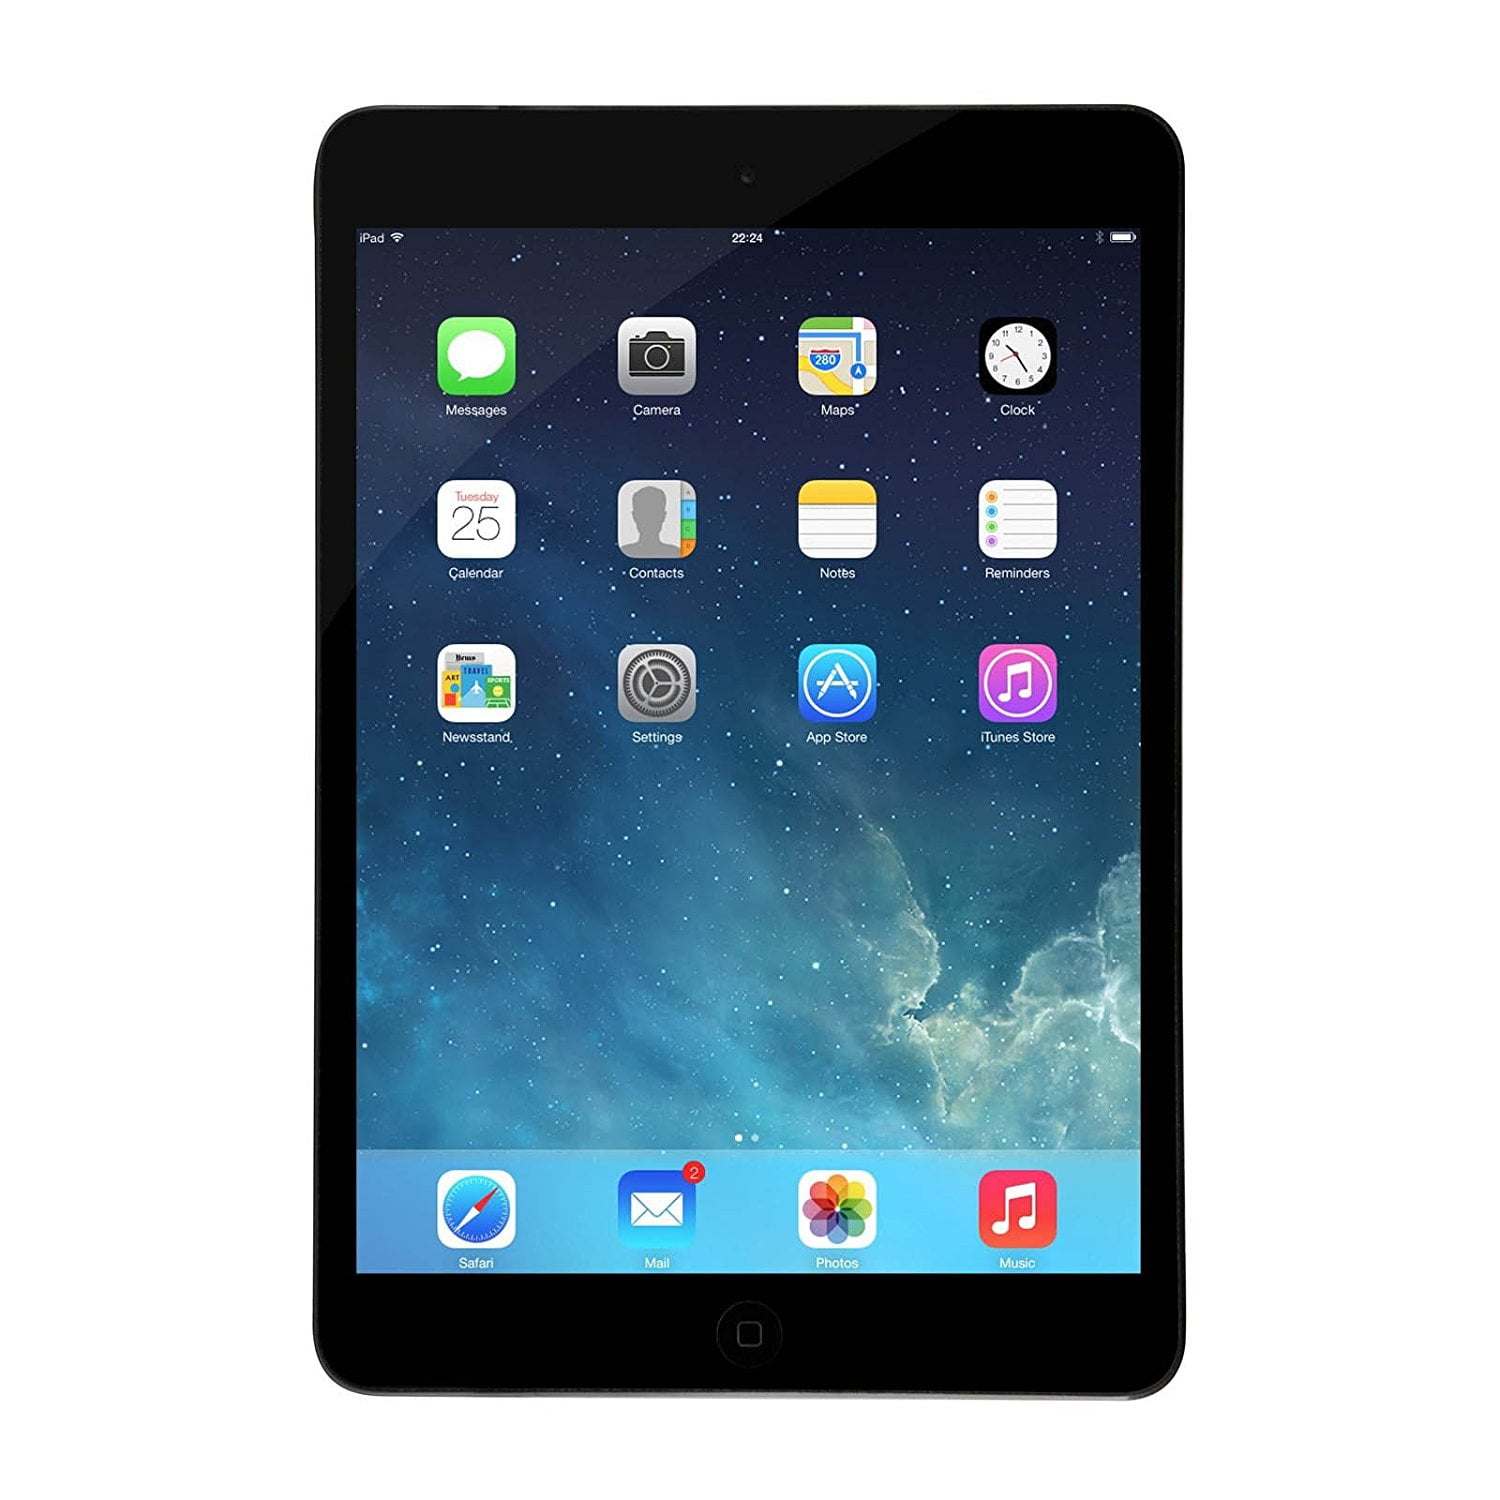 Apple iPad Mini 16Gb Space Gray - Refurbished - Walmart.com